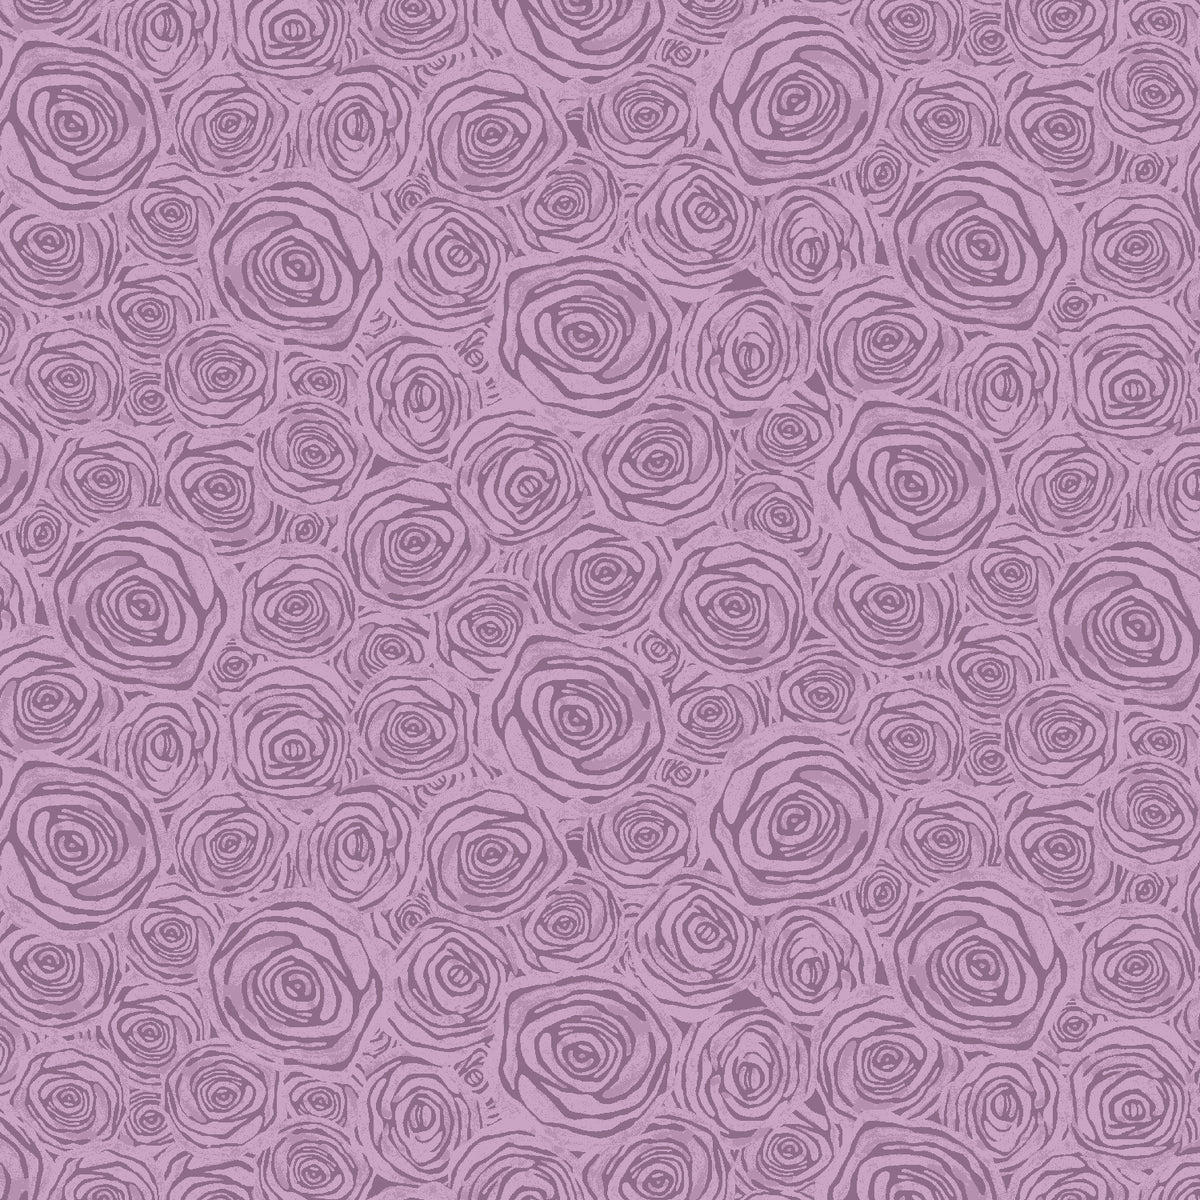 Moonlight Garden Quilt Fabric - Rosy Disposition Tonal Floral in Lilac Purple - RJ5503-LI1